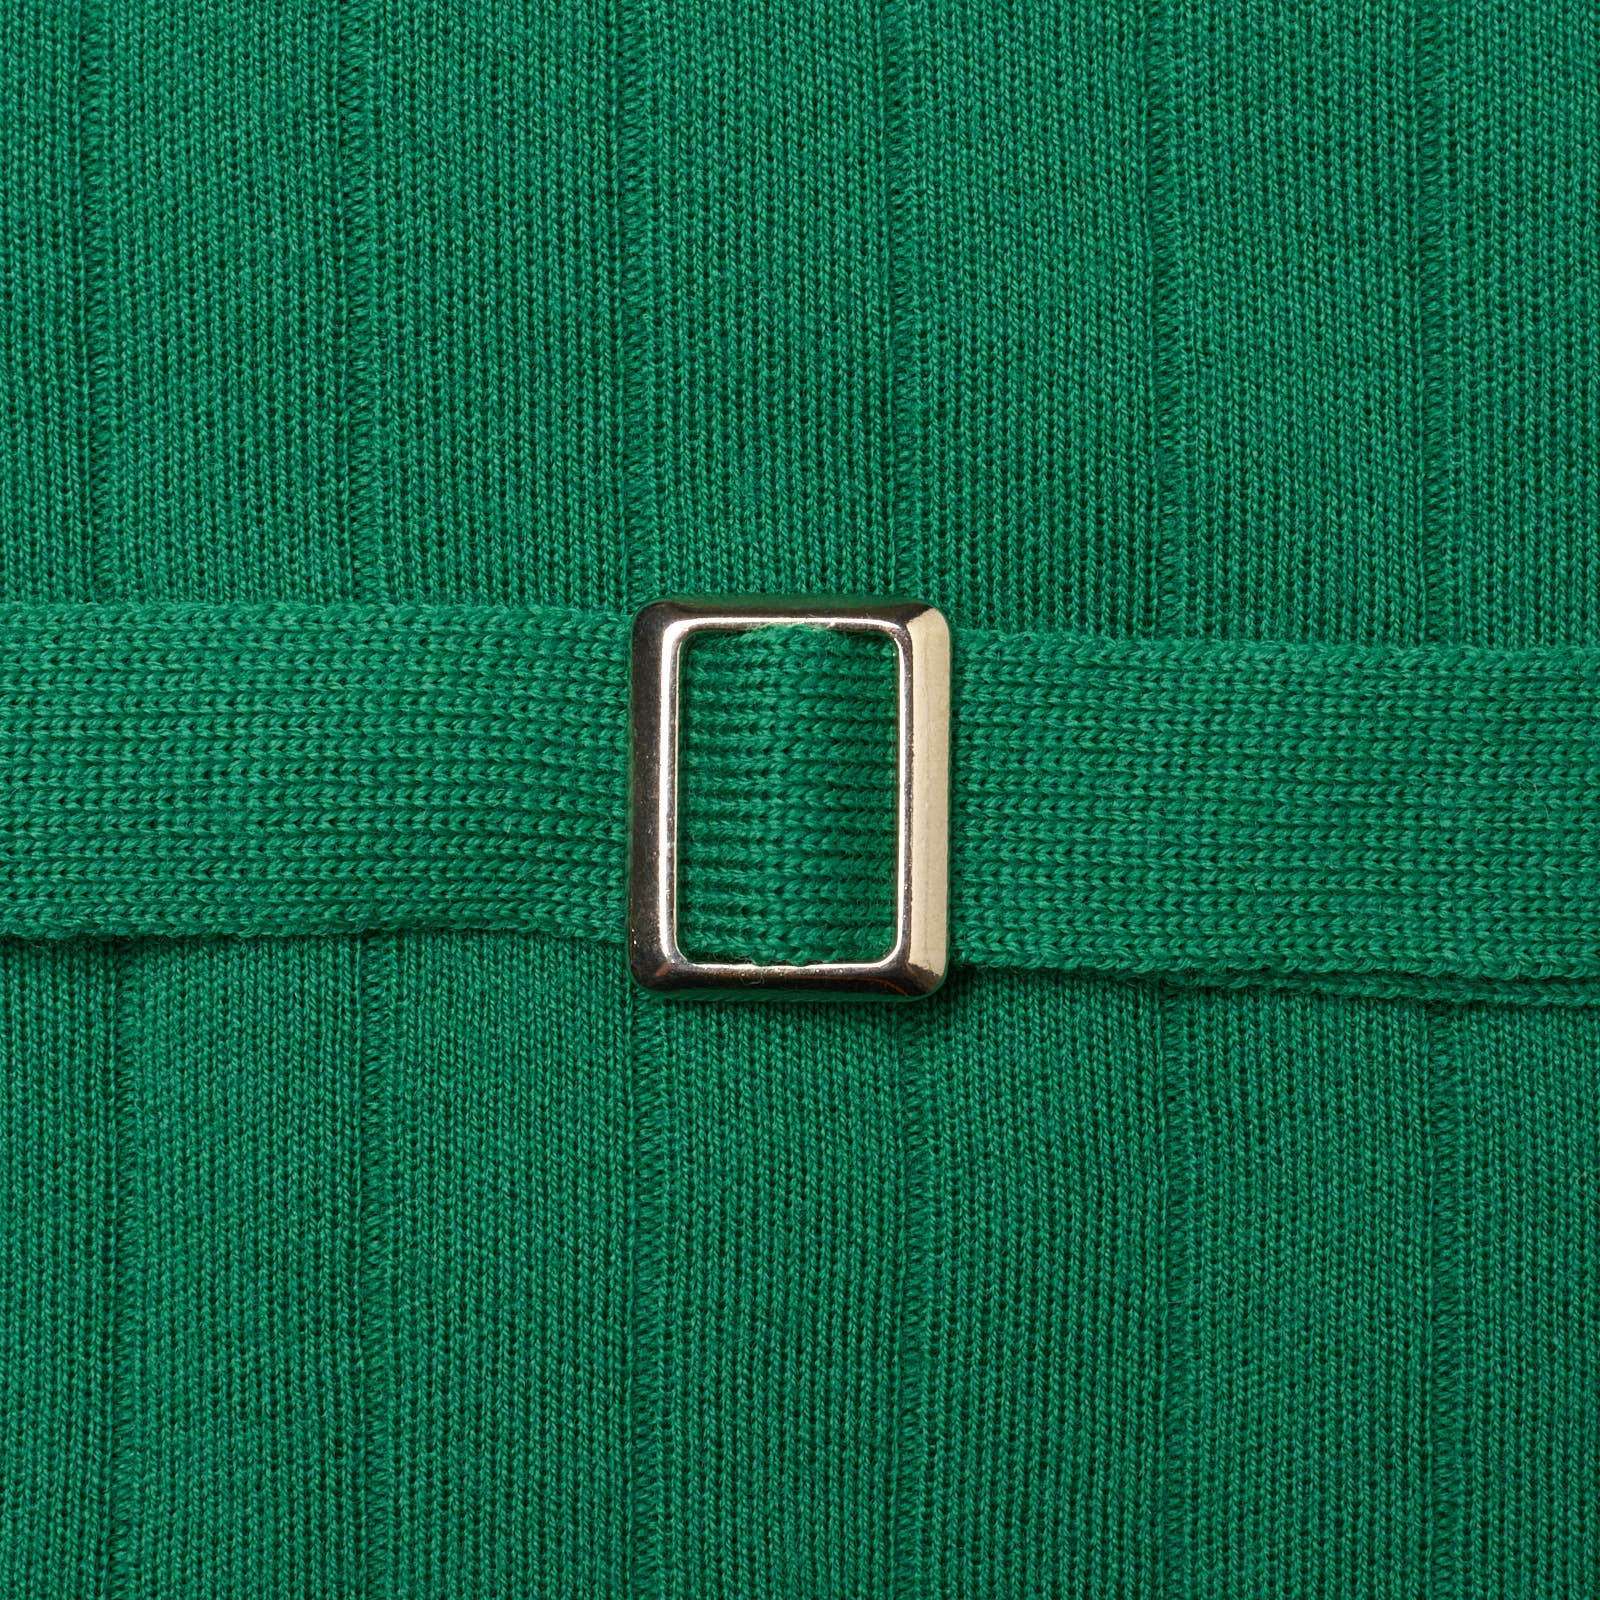 ONES Green Loro Piana Wool Knit 5 Button Vest Waistcoat EU 50 NEW US M